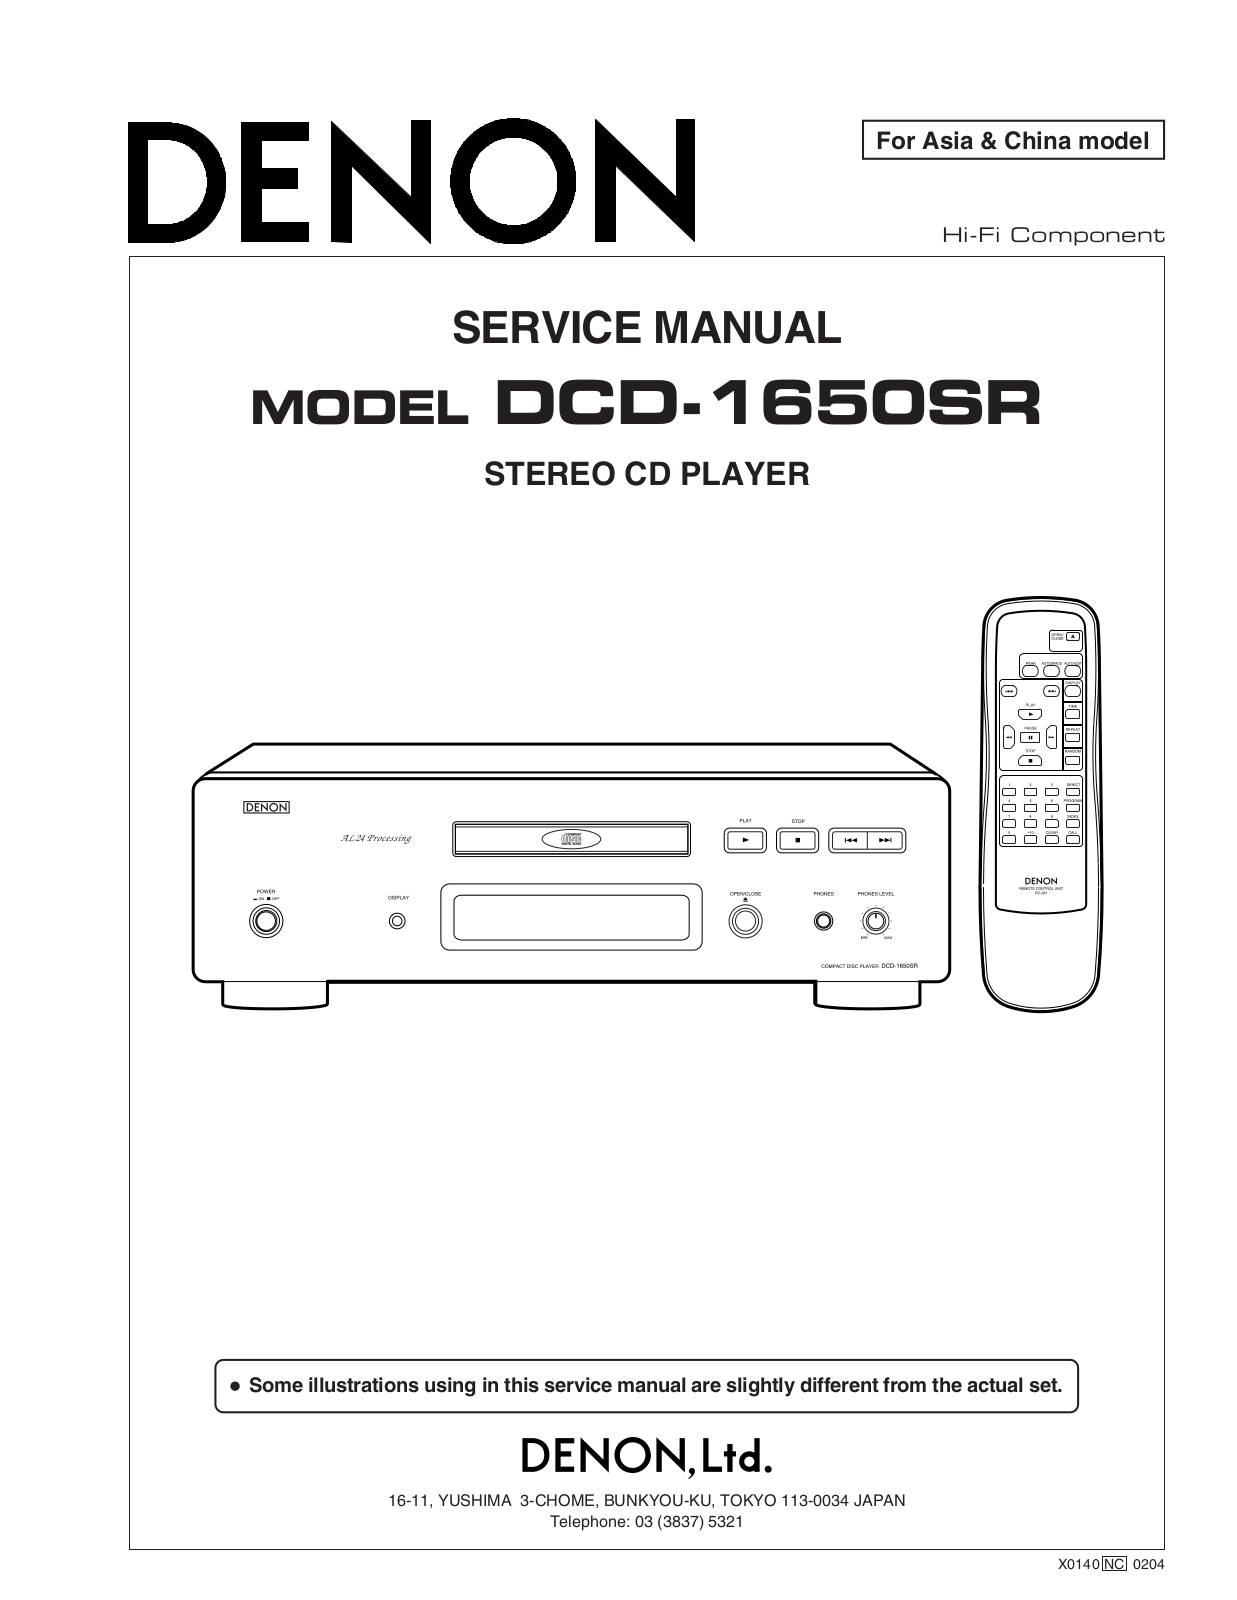 Denon DCD-1650SR Service Manual